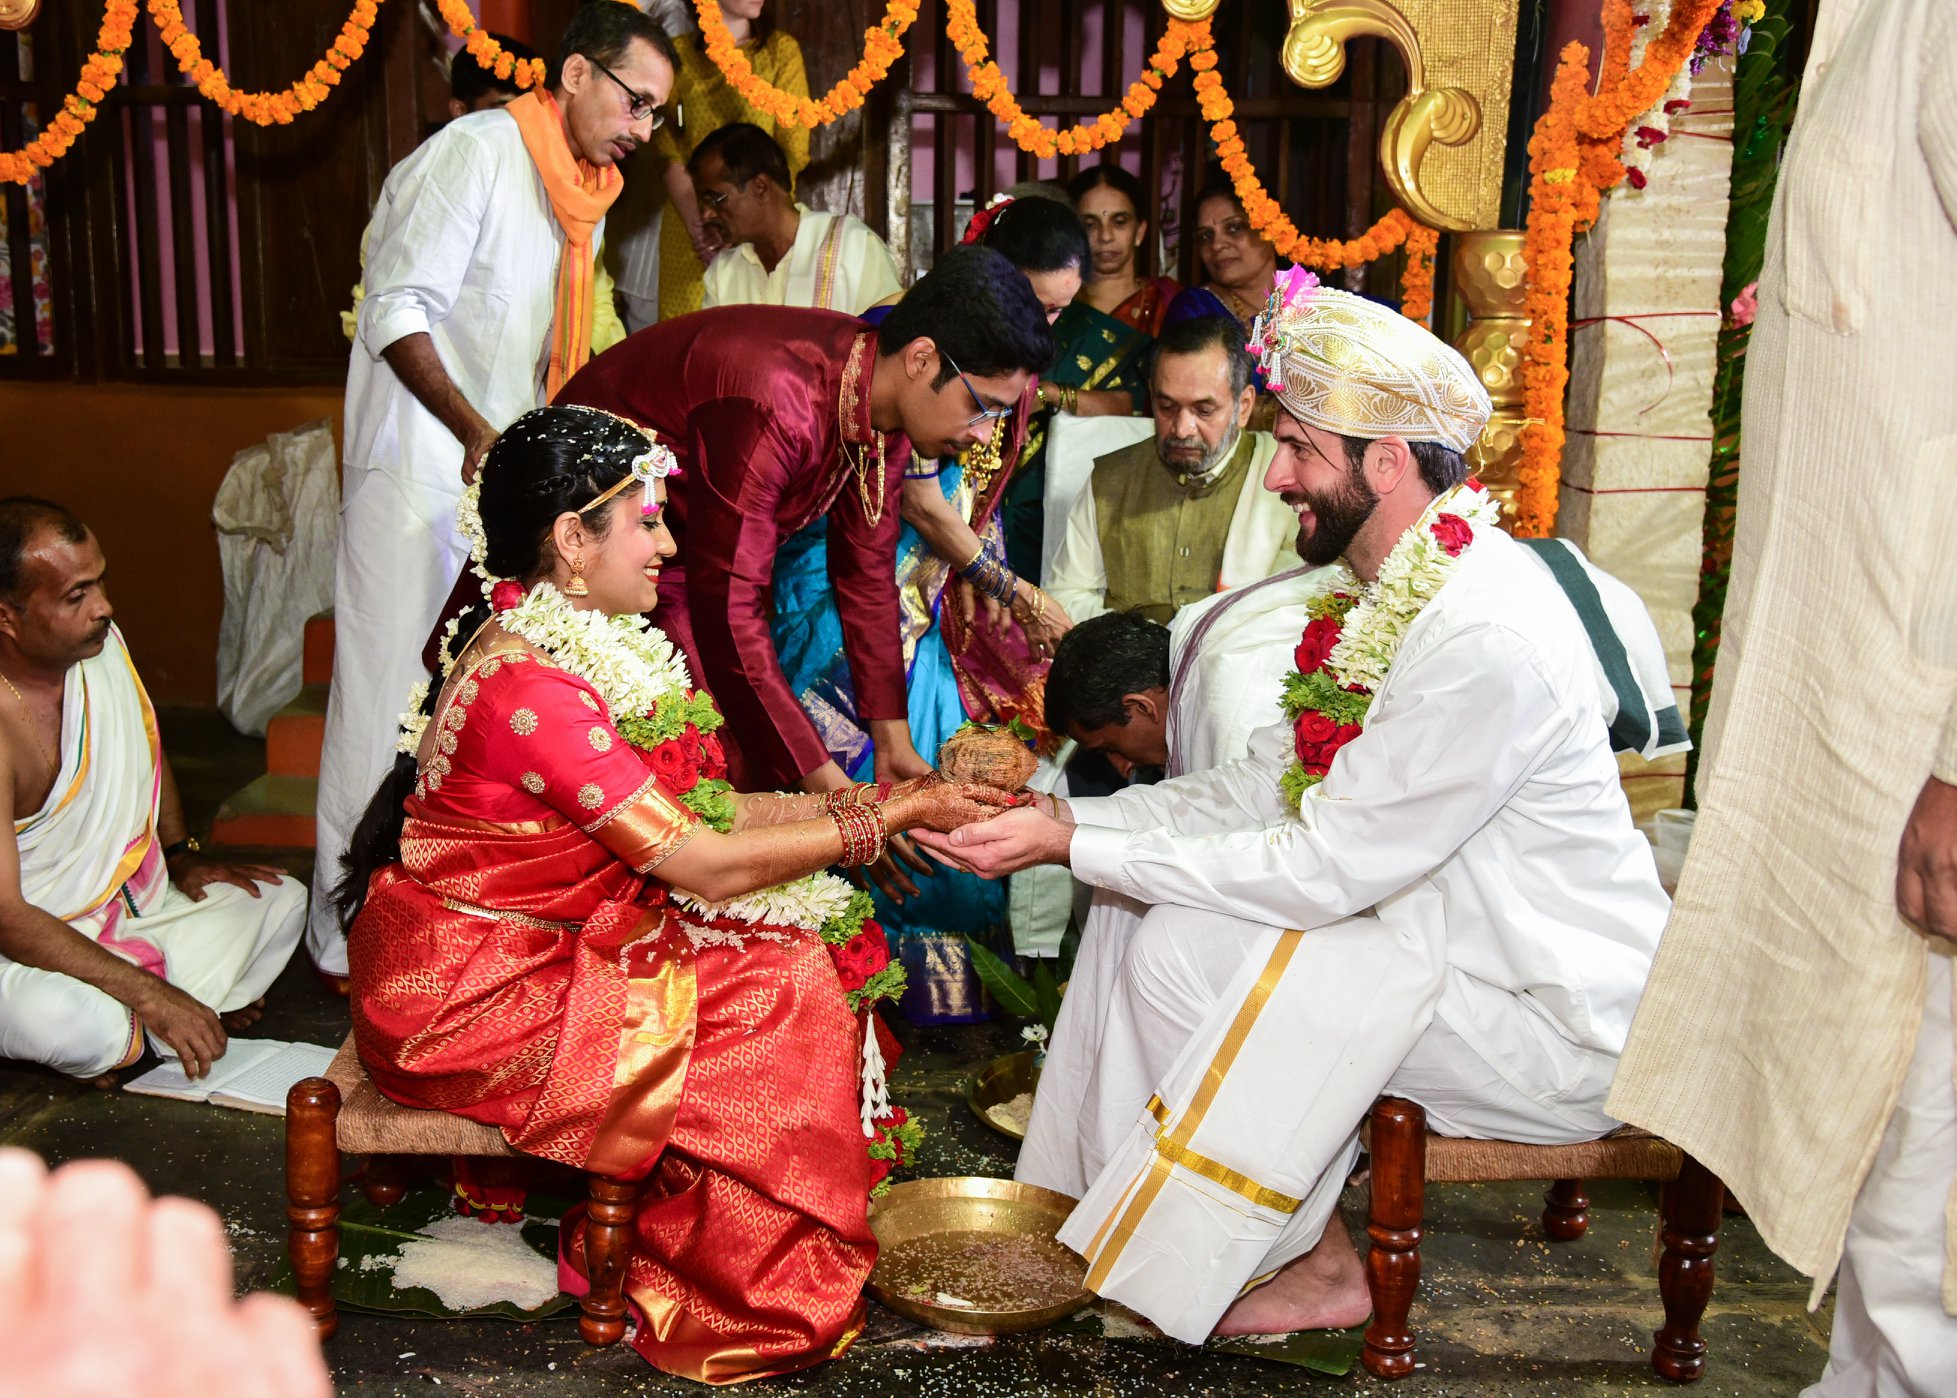  Megha Hegde, MA SID’14 and Patrick Cutrona, MA SID’15 during their Indian wedding ceremony